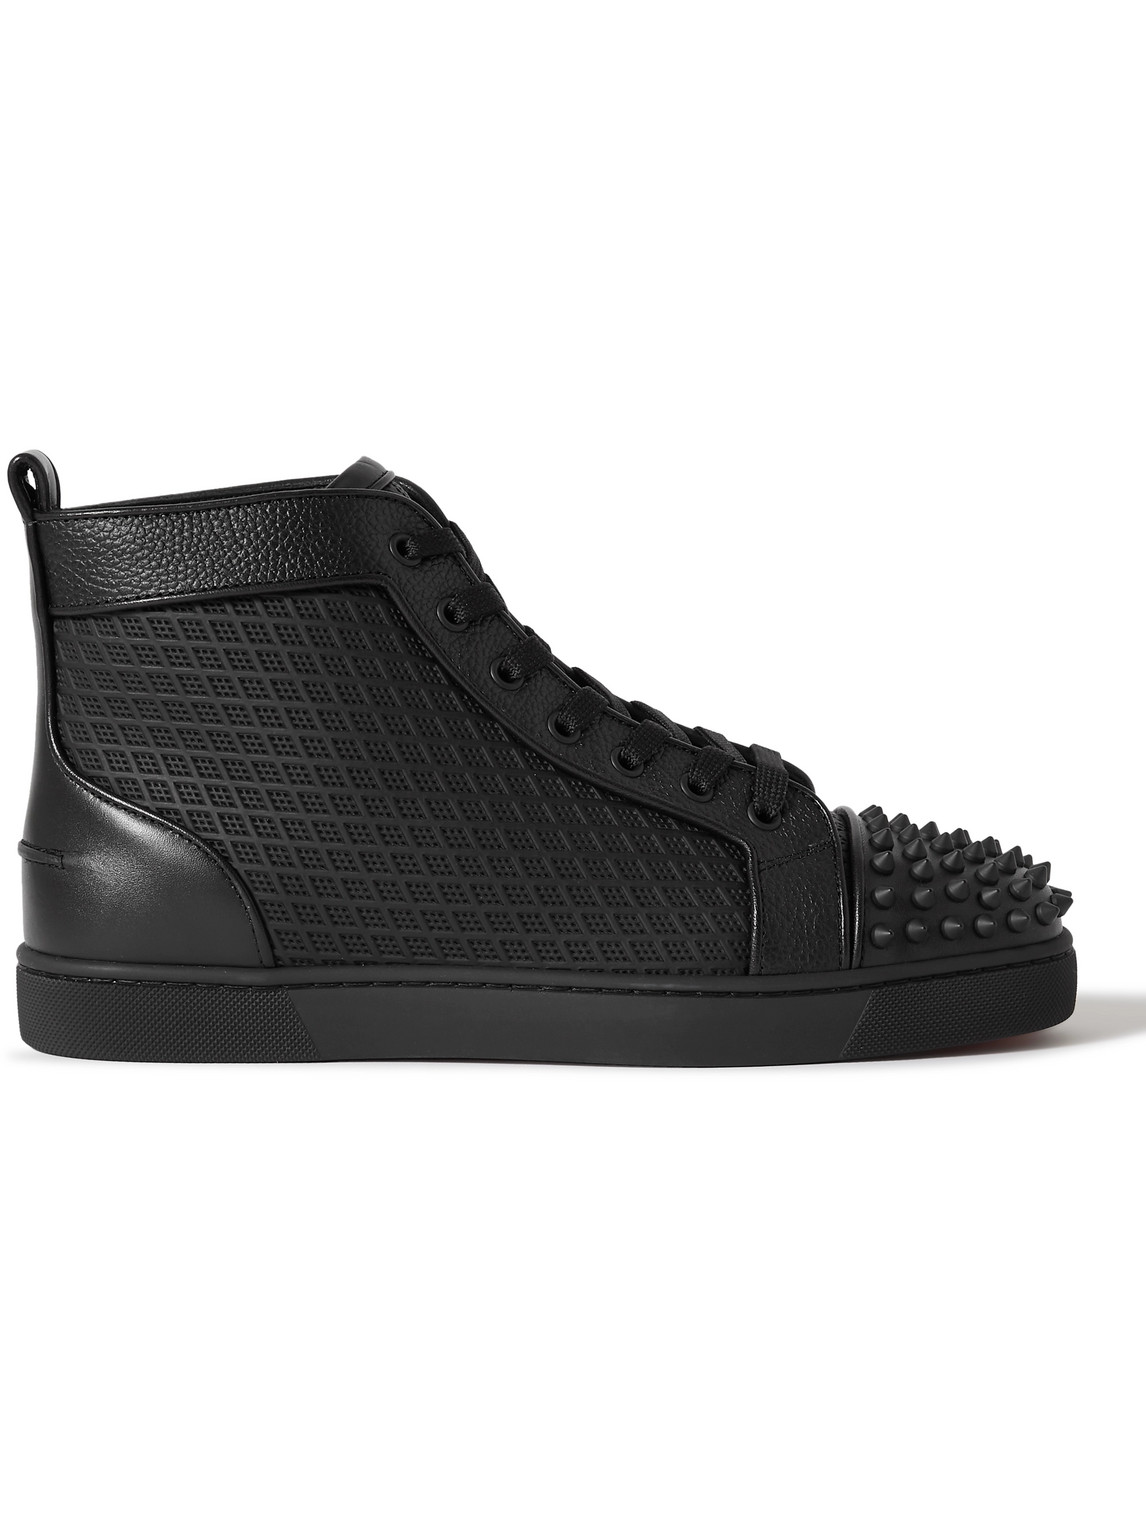 Christian Louboutin - Lou Spikes Orlato Studded Leather and Mesh High-Top Sneakers - Men - Black - EU 46 von Christian Louboutin